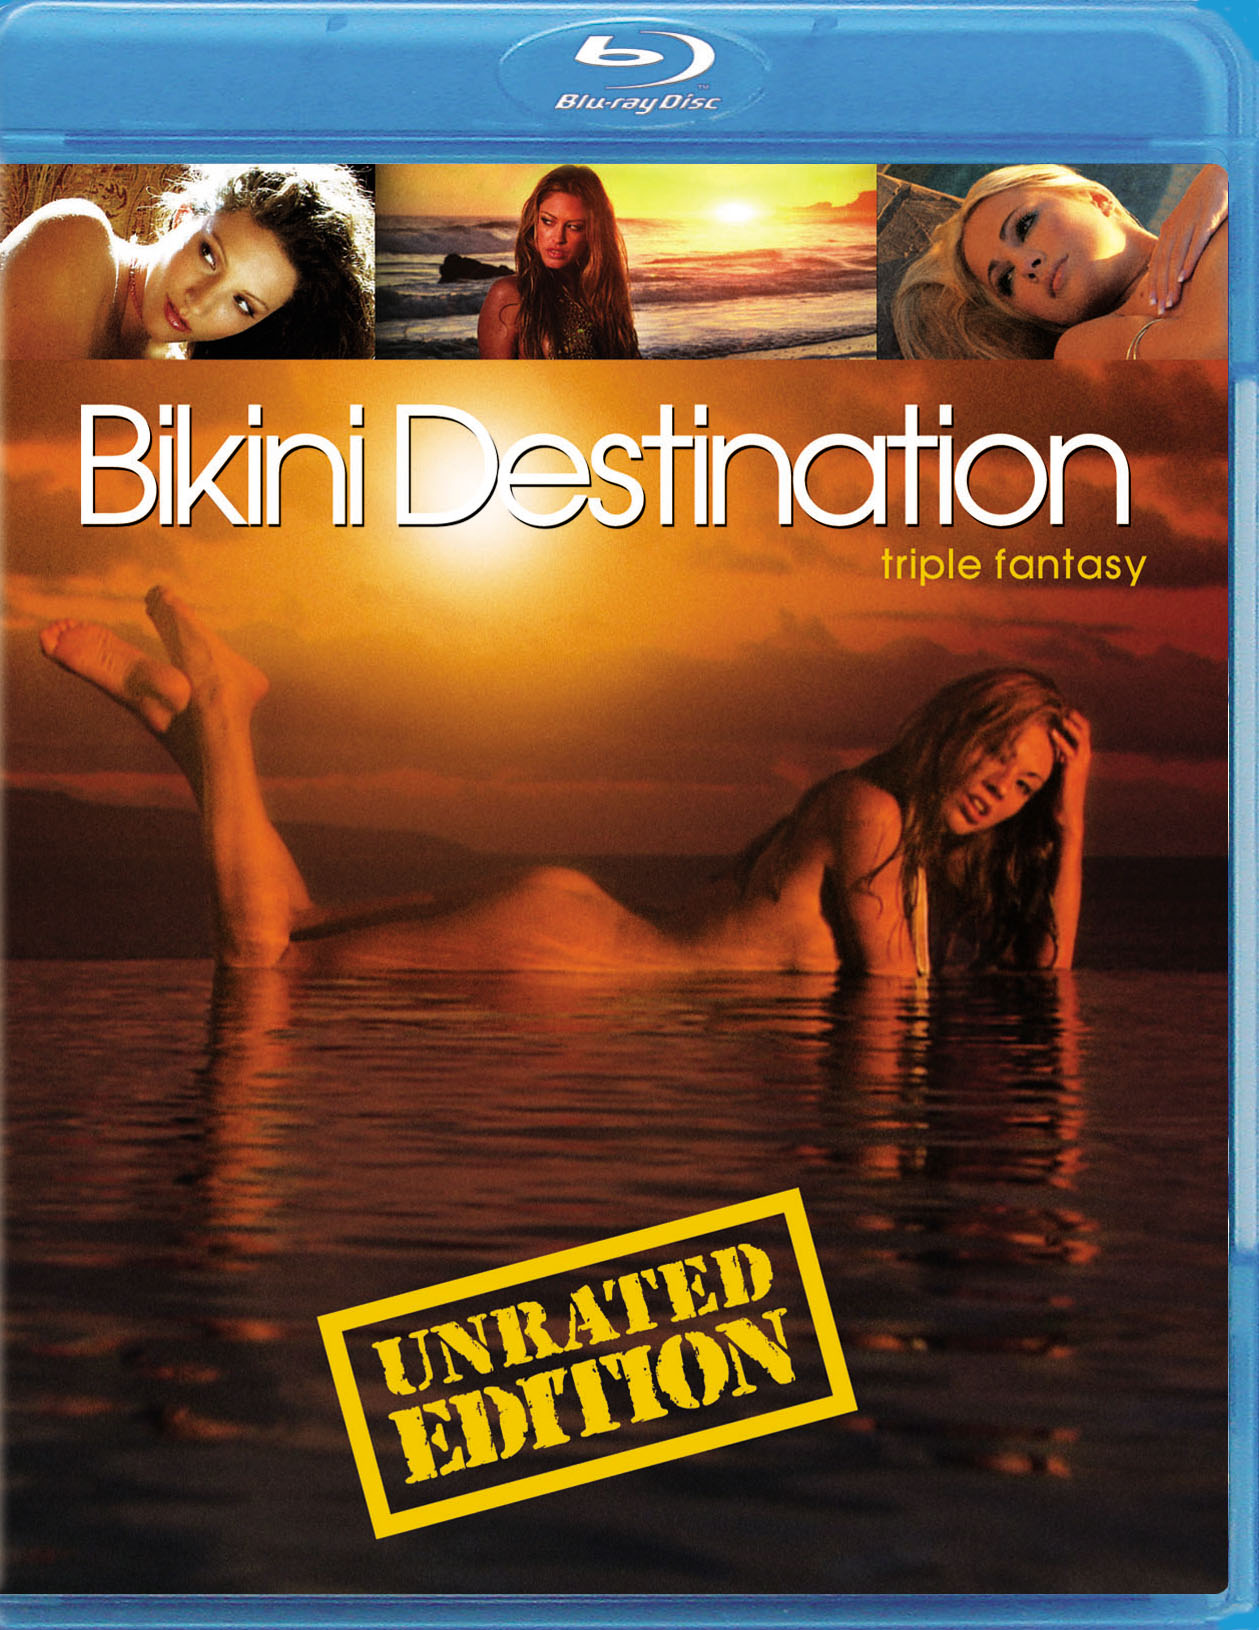 Bikini Destination Blu Ray Best Buy